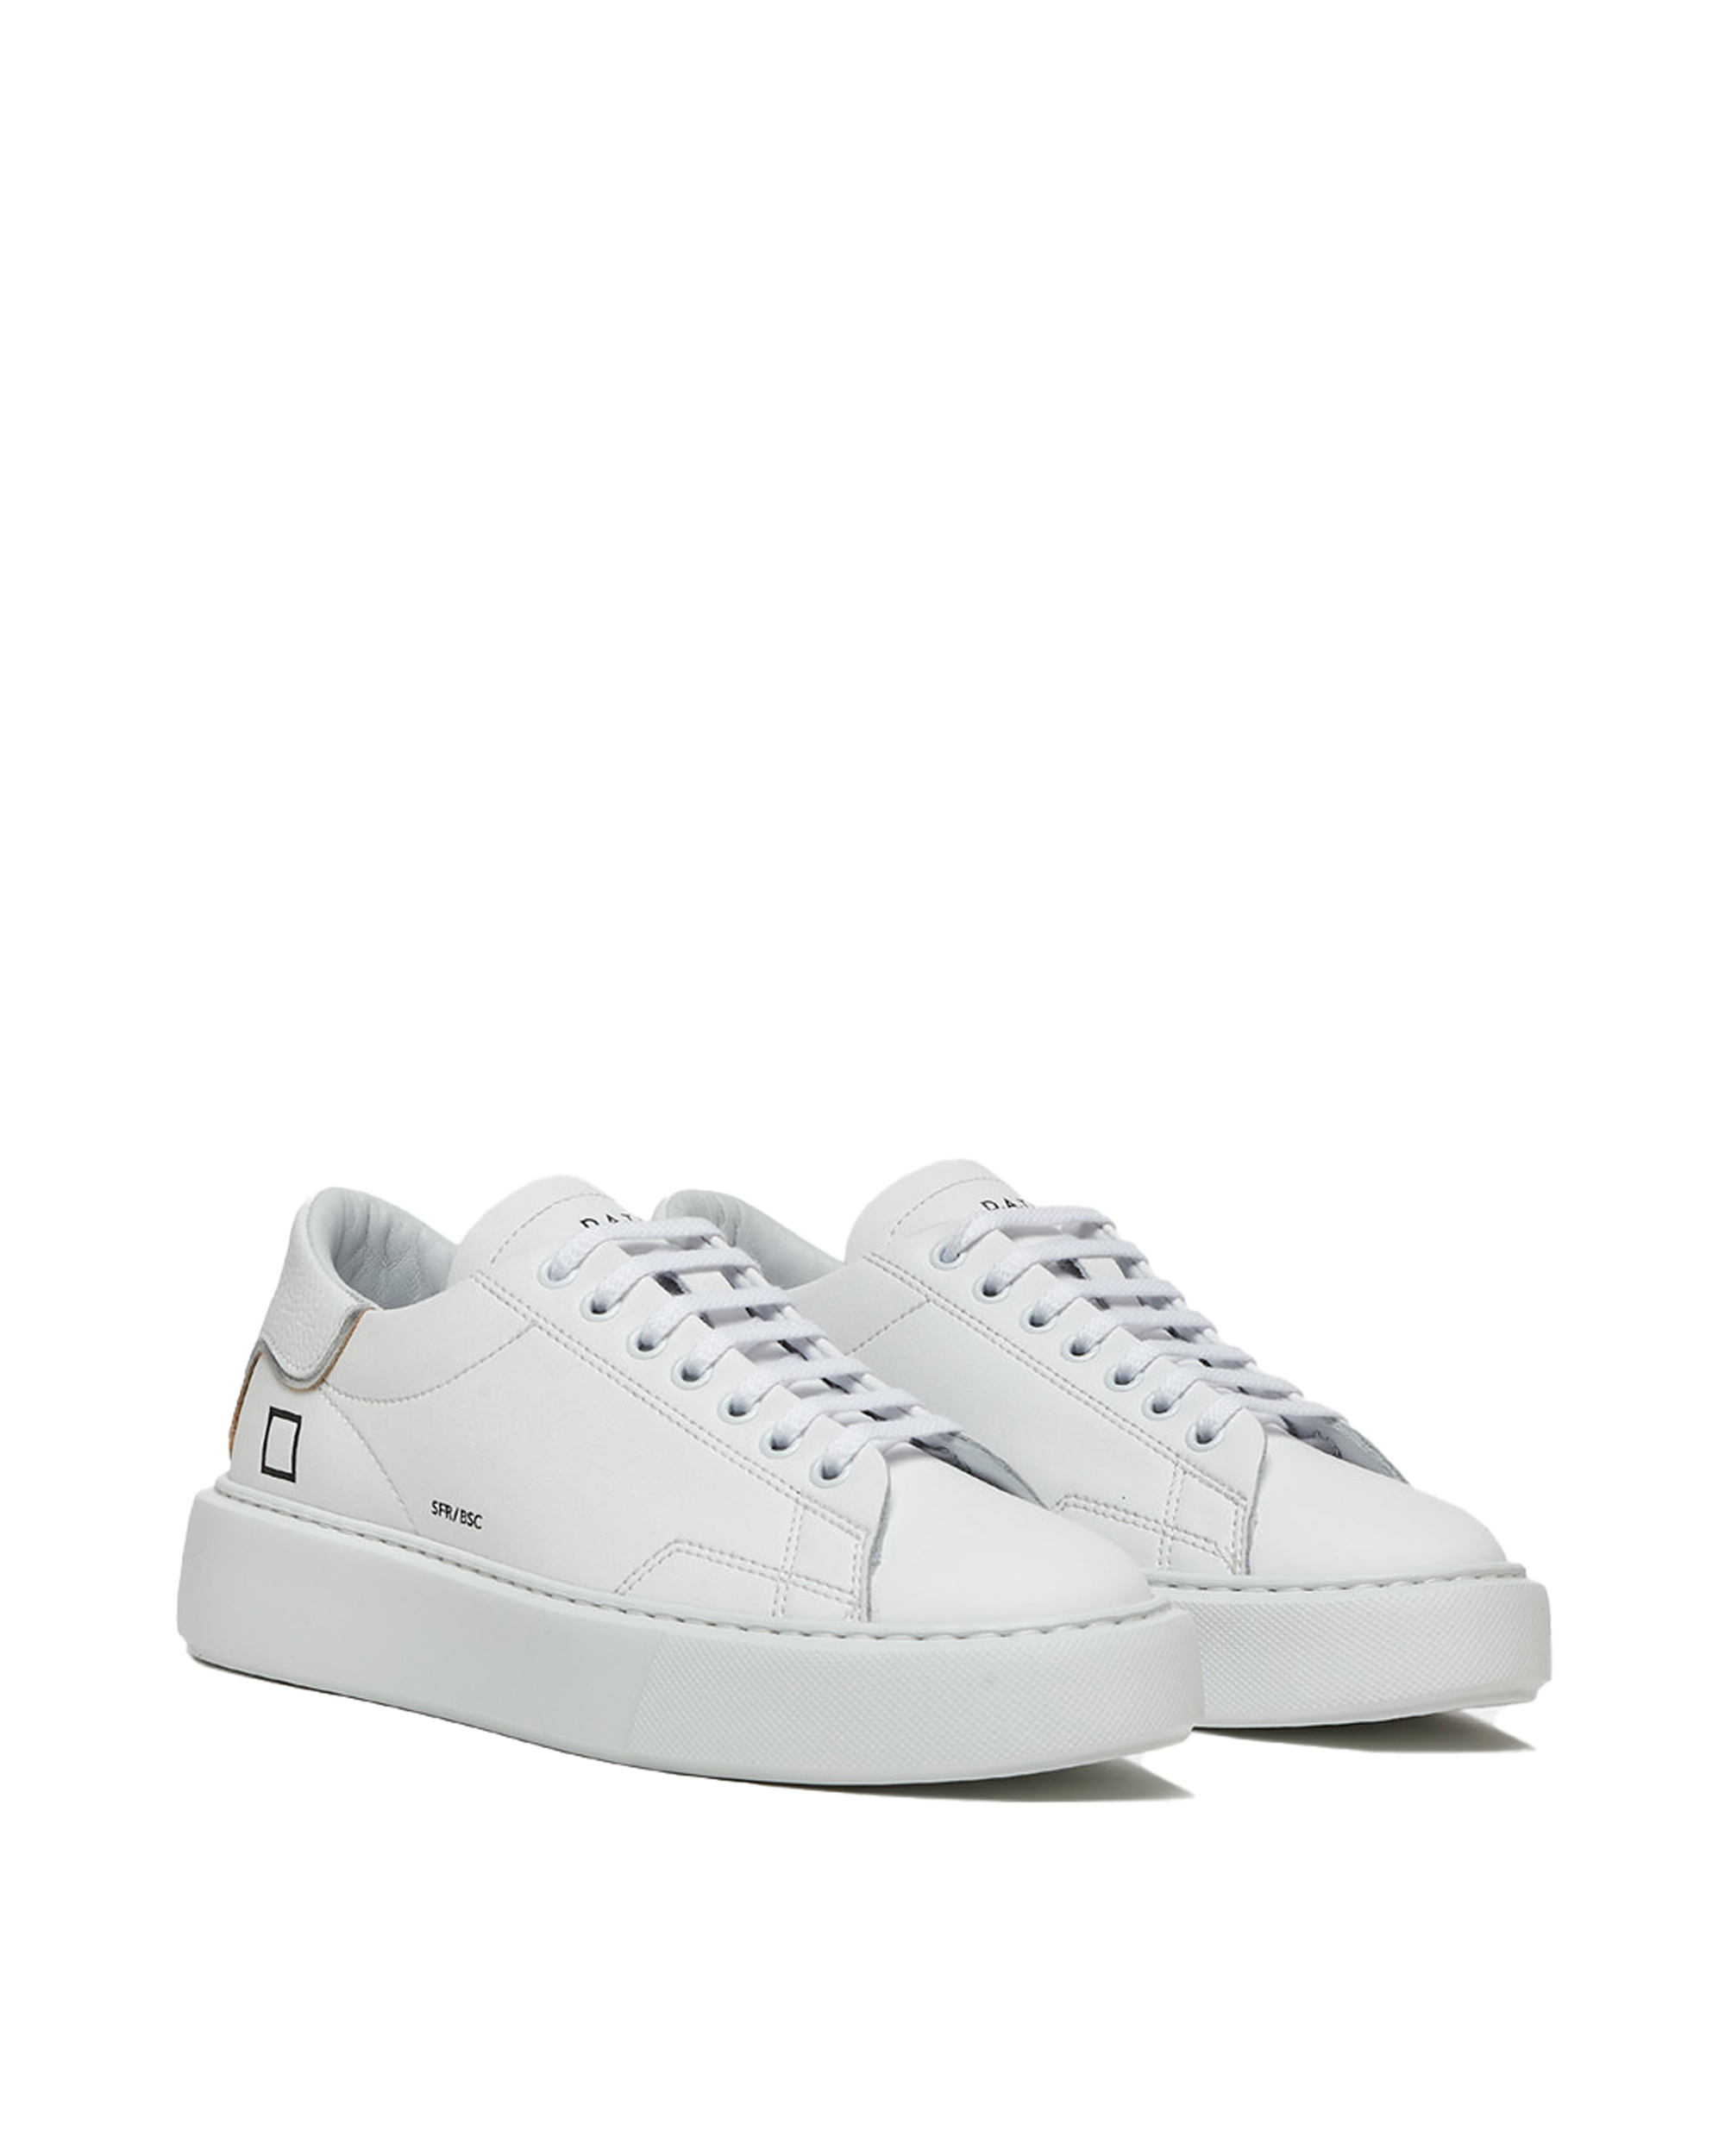 Shop Date Sneaker Sfera Calf White